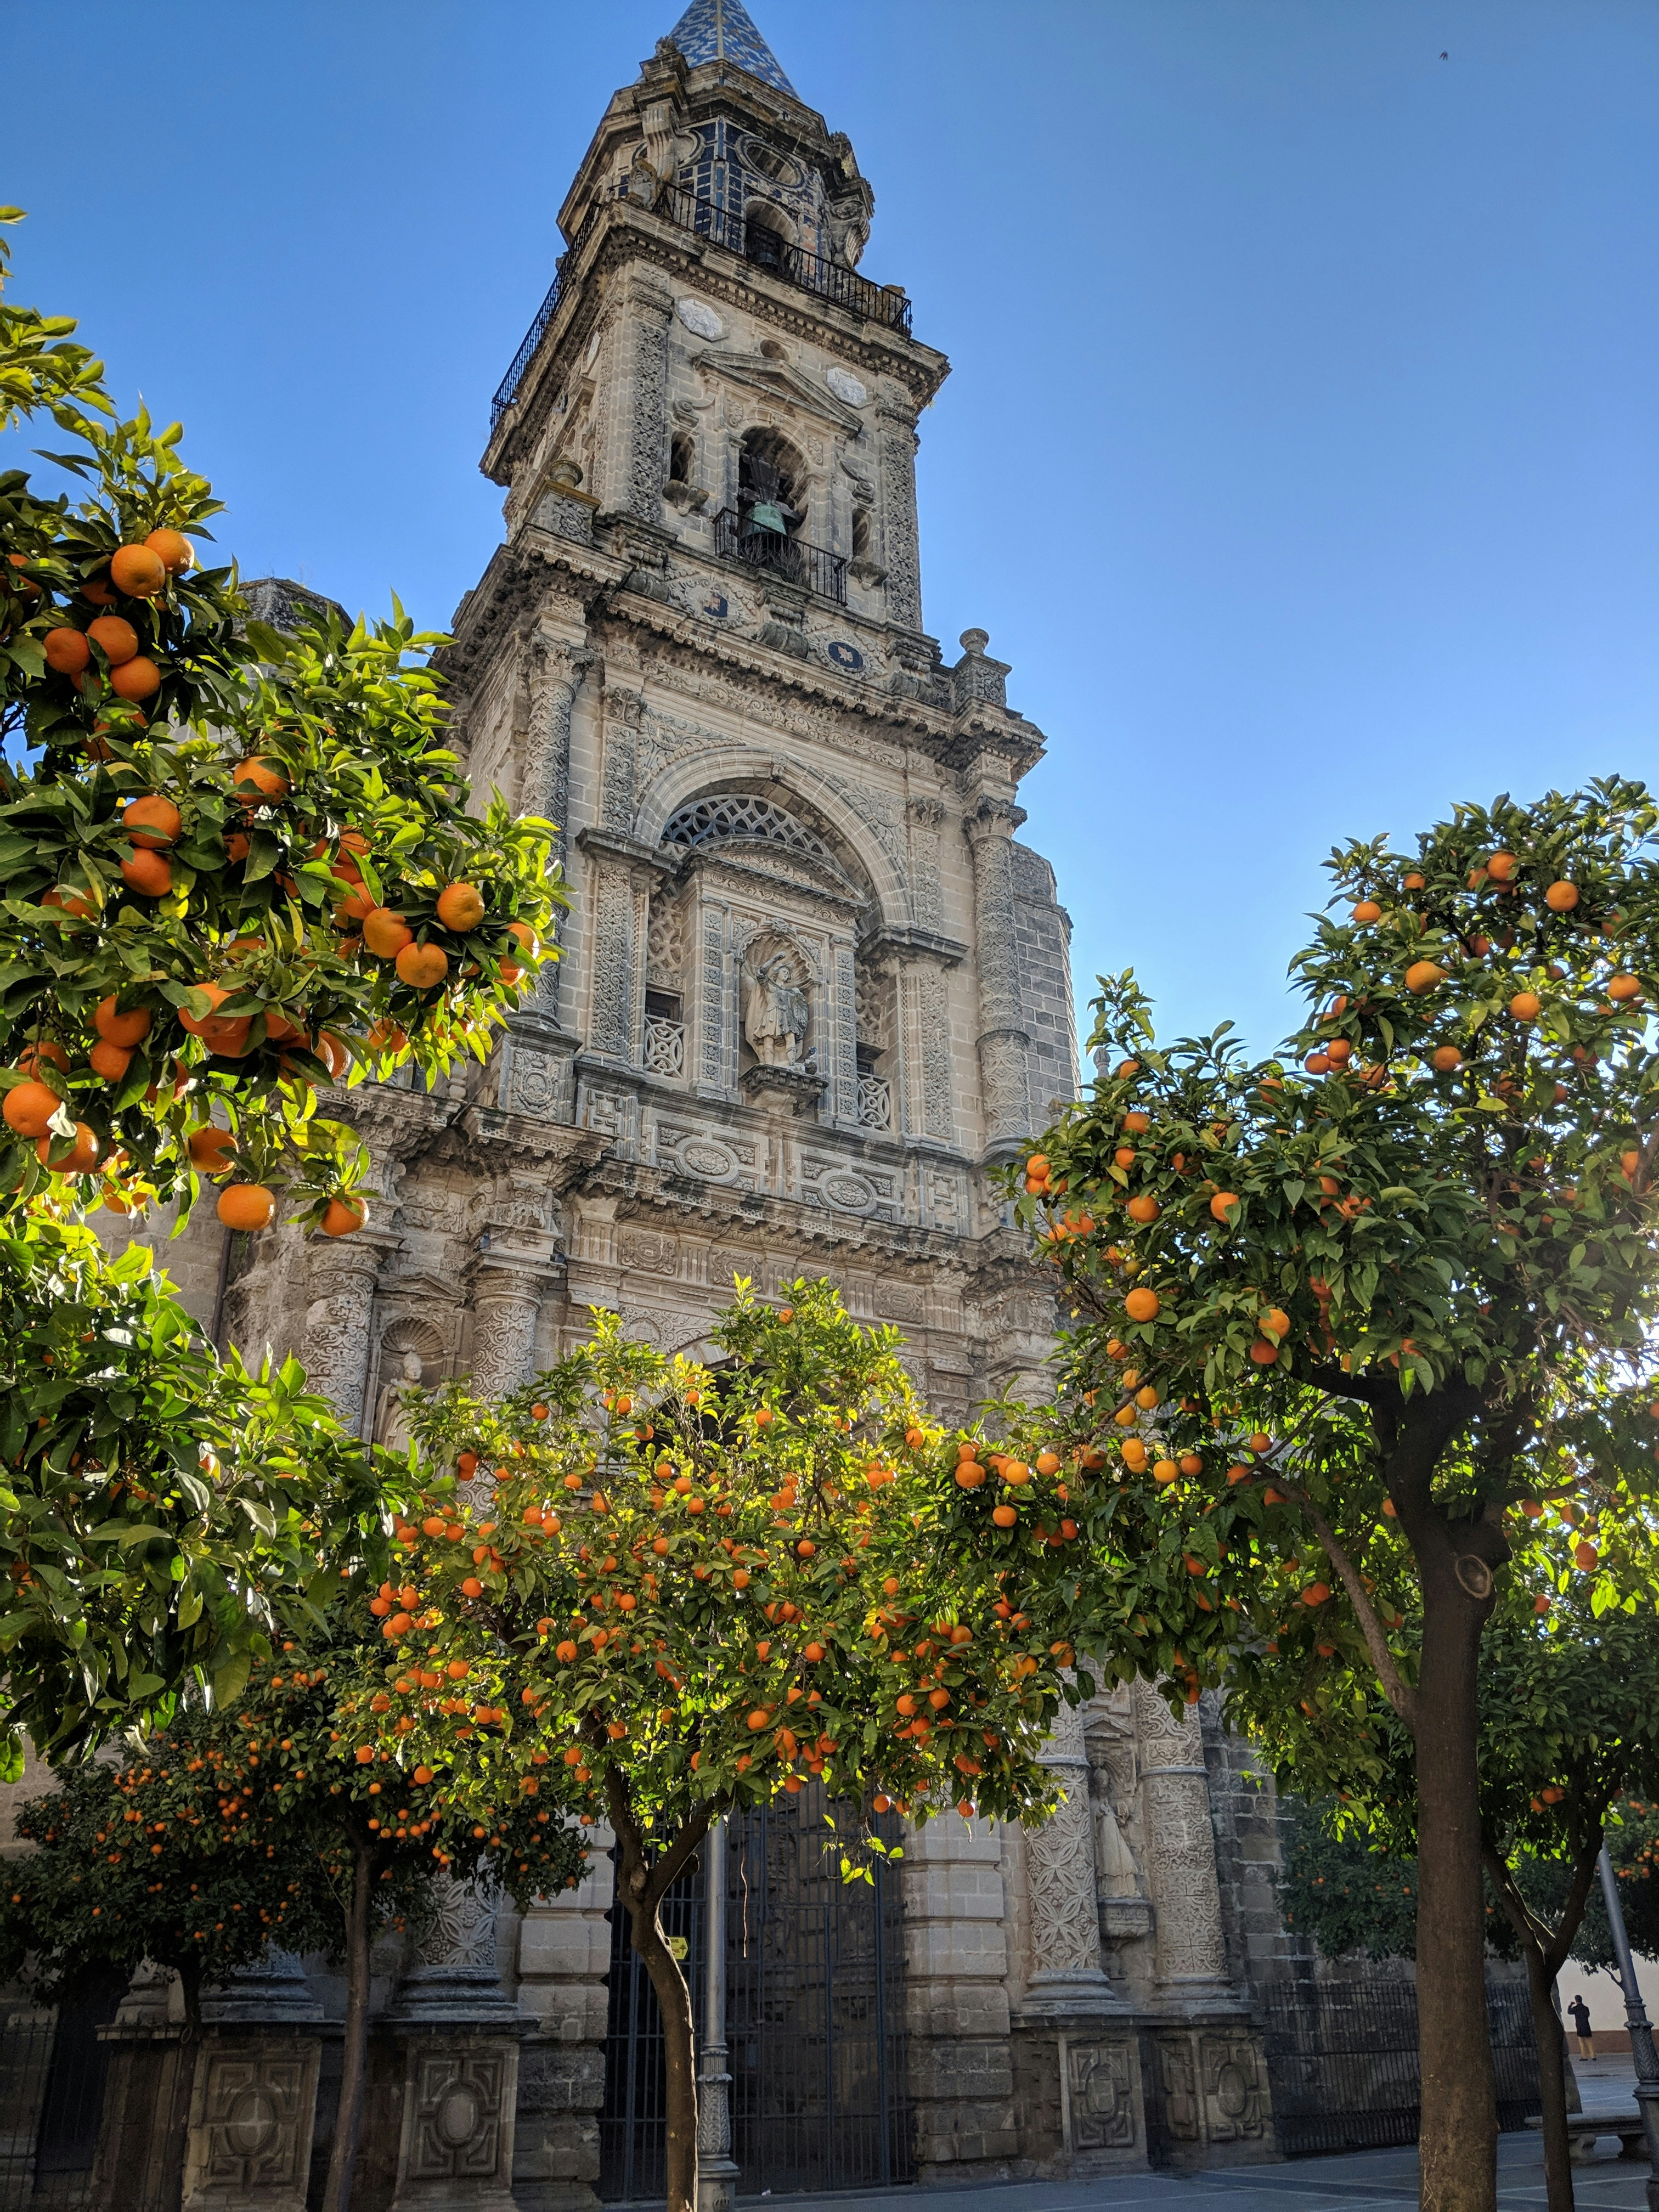 Church in Jerez de la Frontera with orange trees in a courtyard